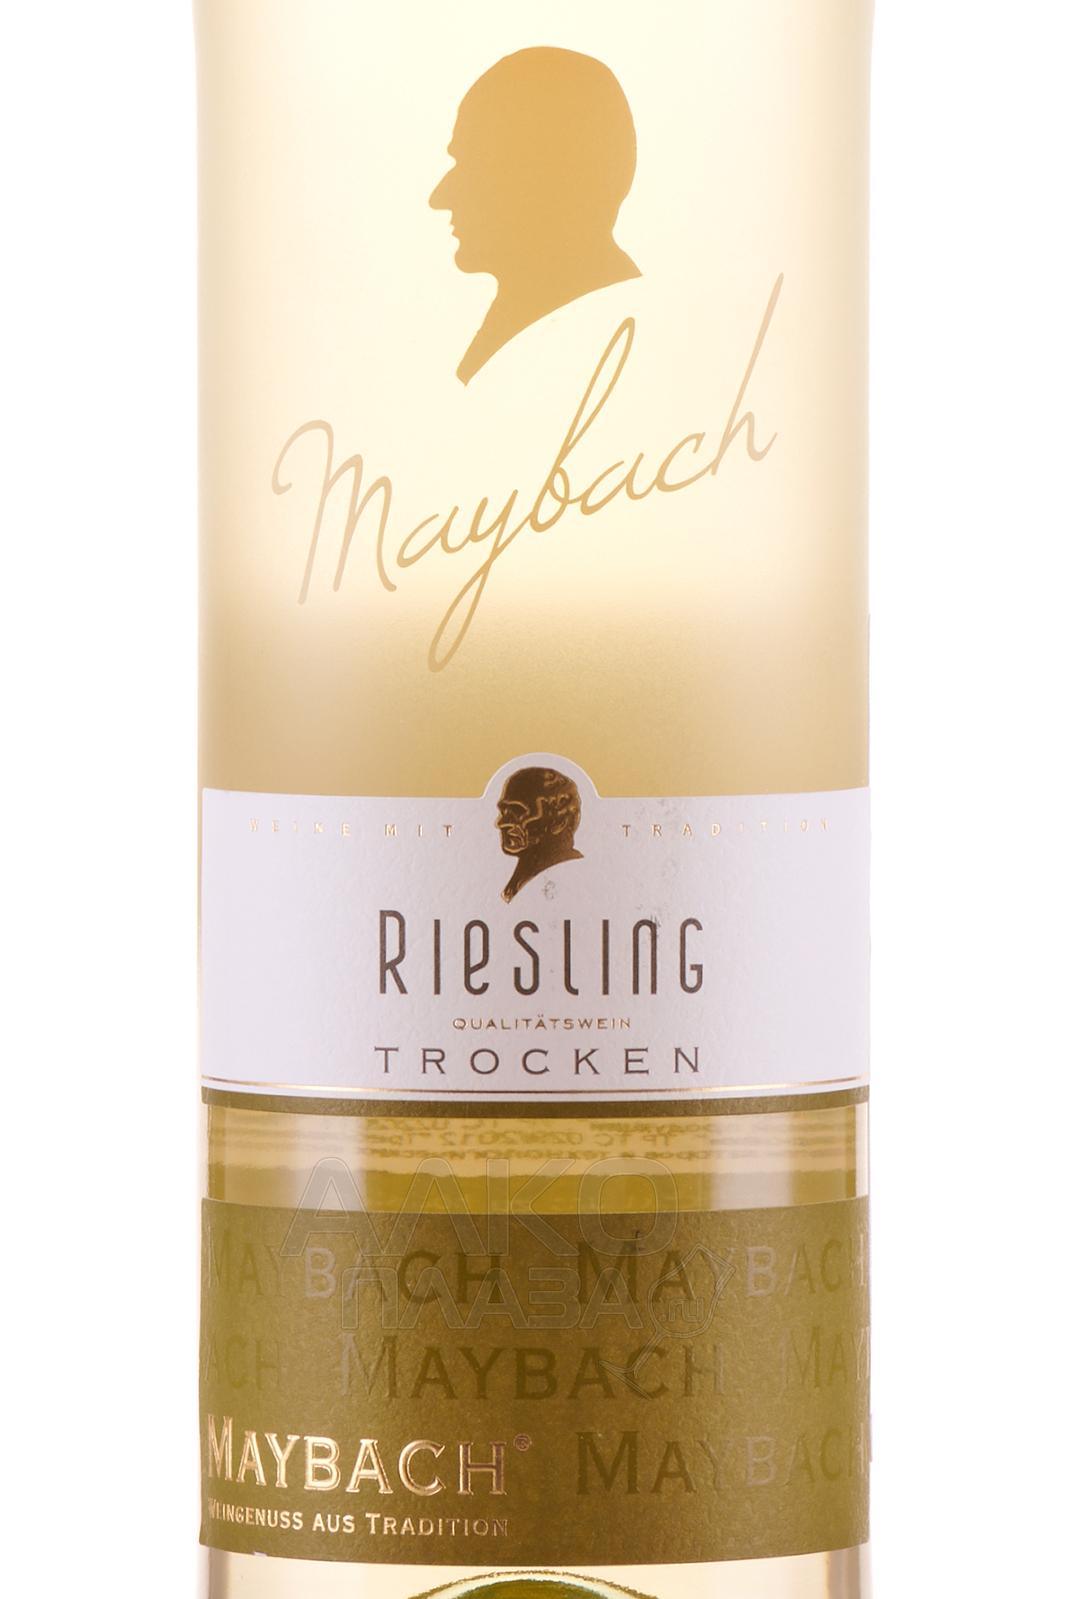 Peter Mertes Maybach Riesling Qualitatswein Trocken -  вино .